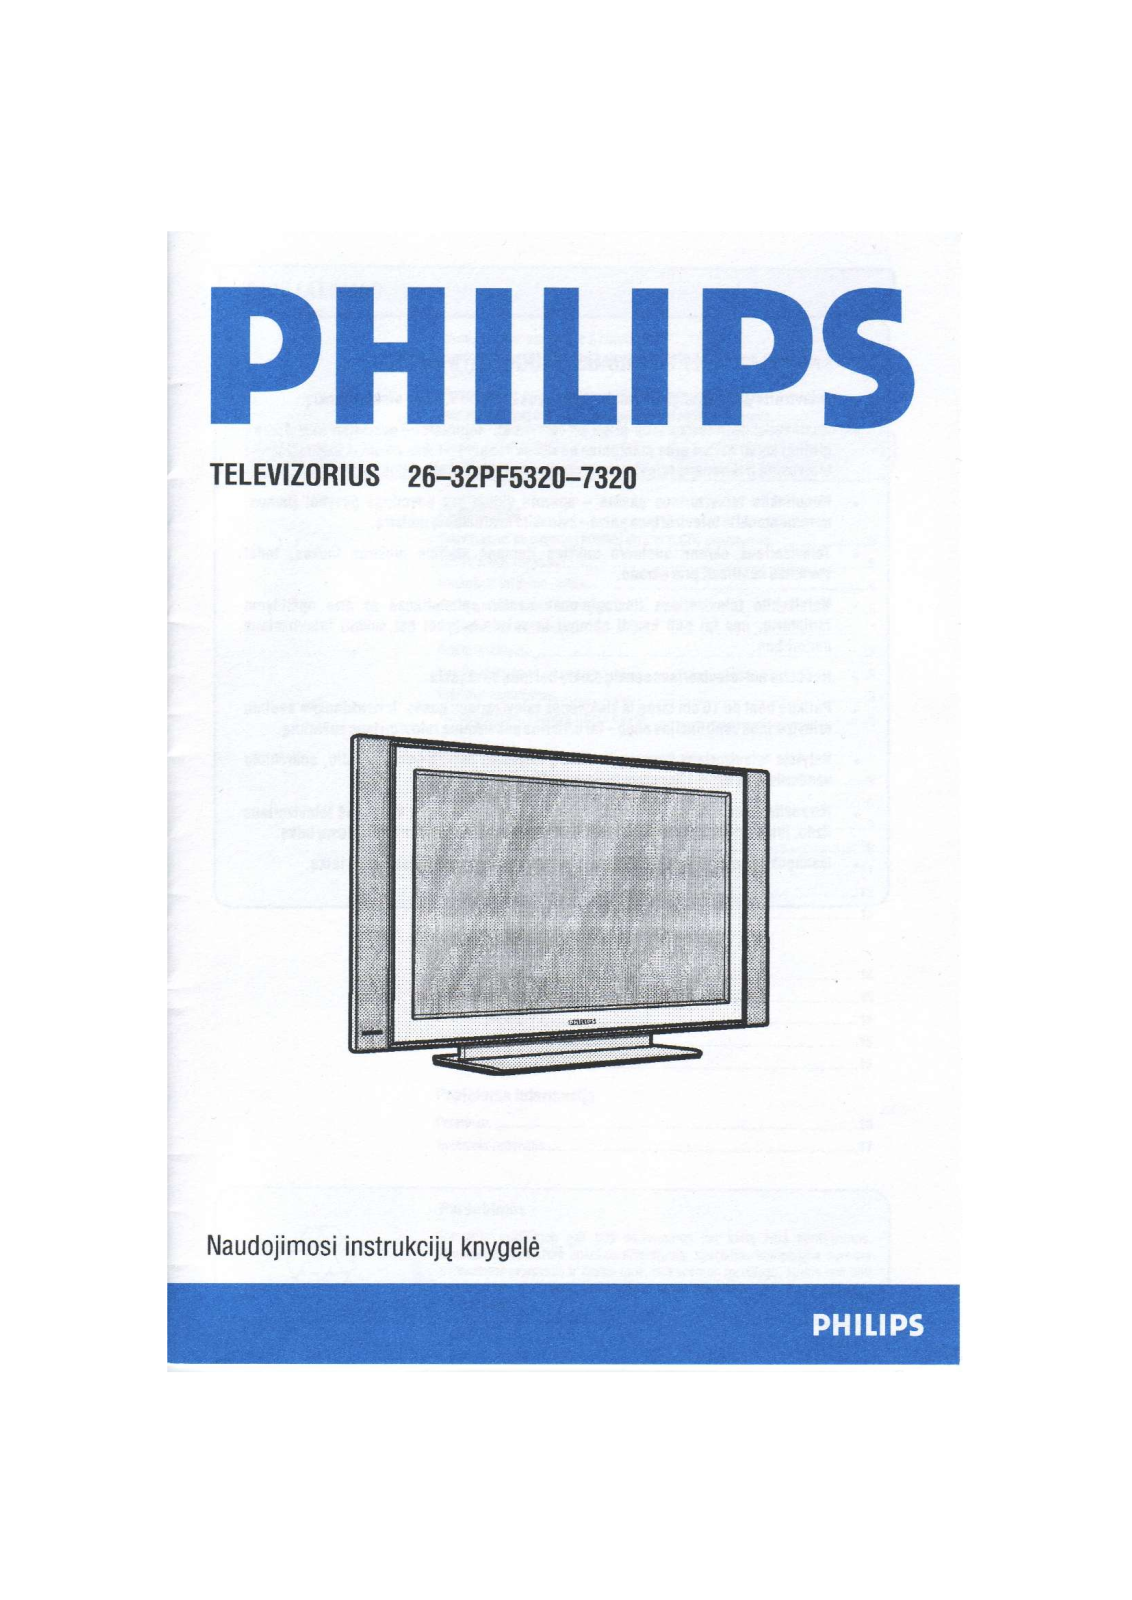 Philips 26-32PF5320-7320 User Manual